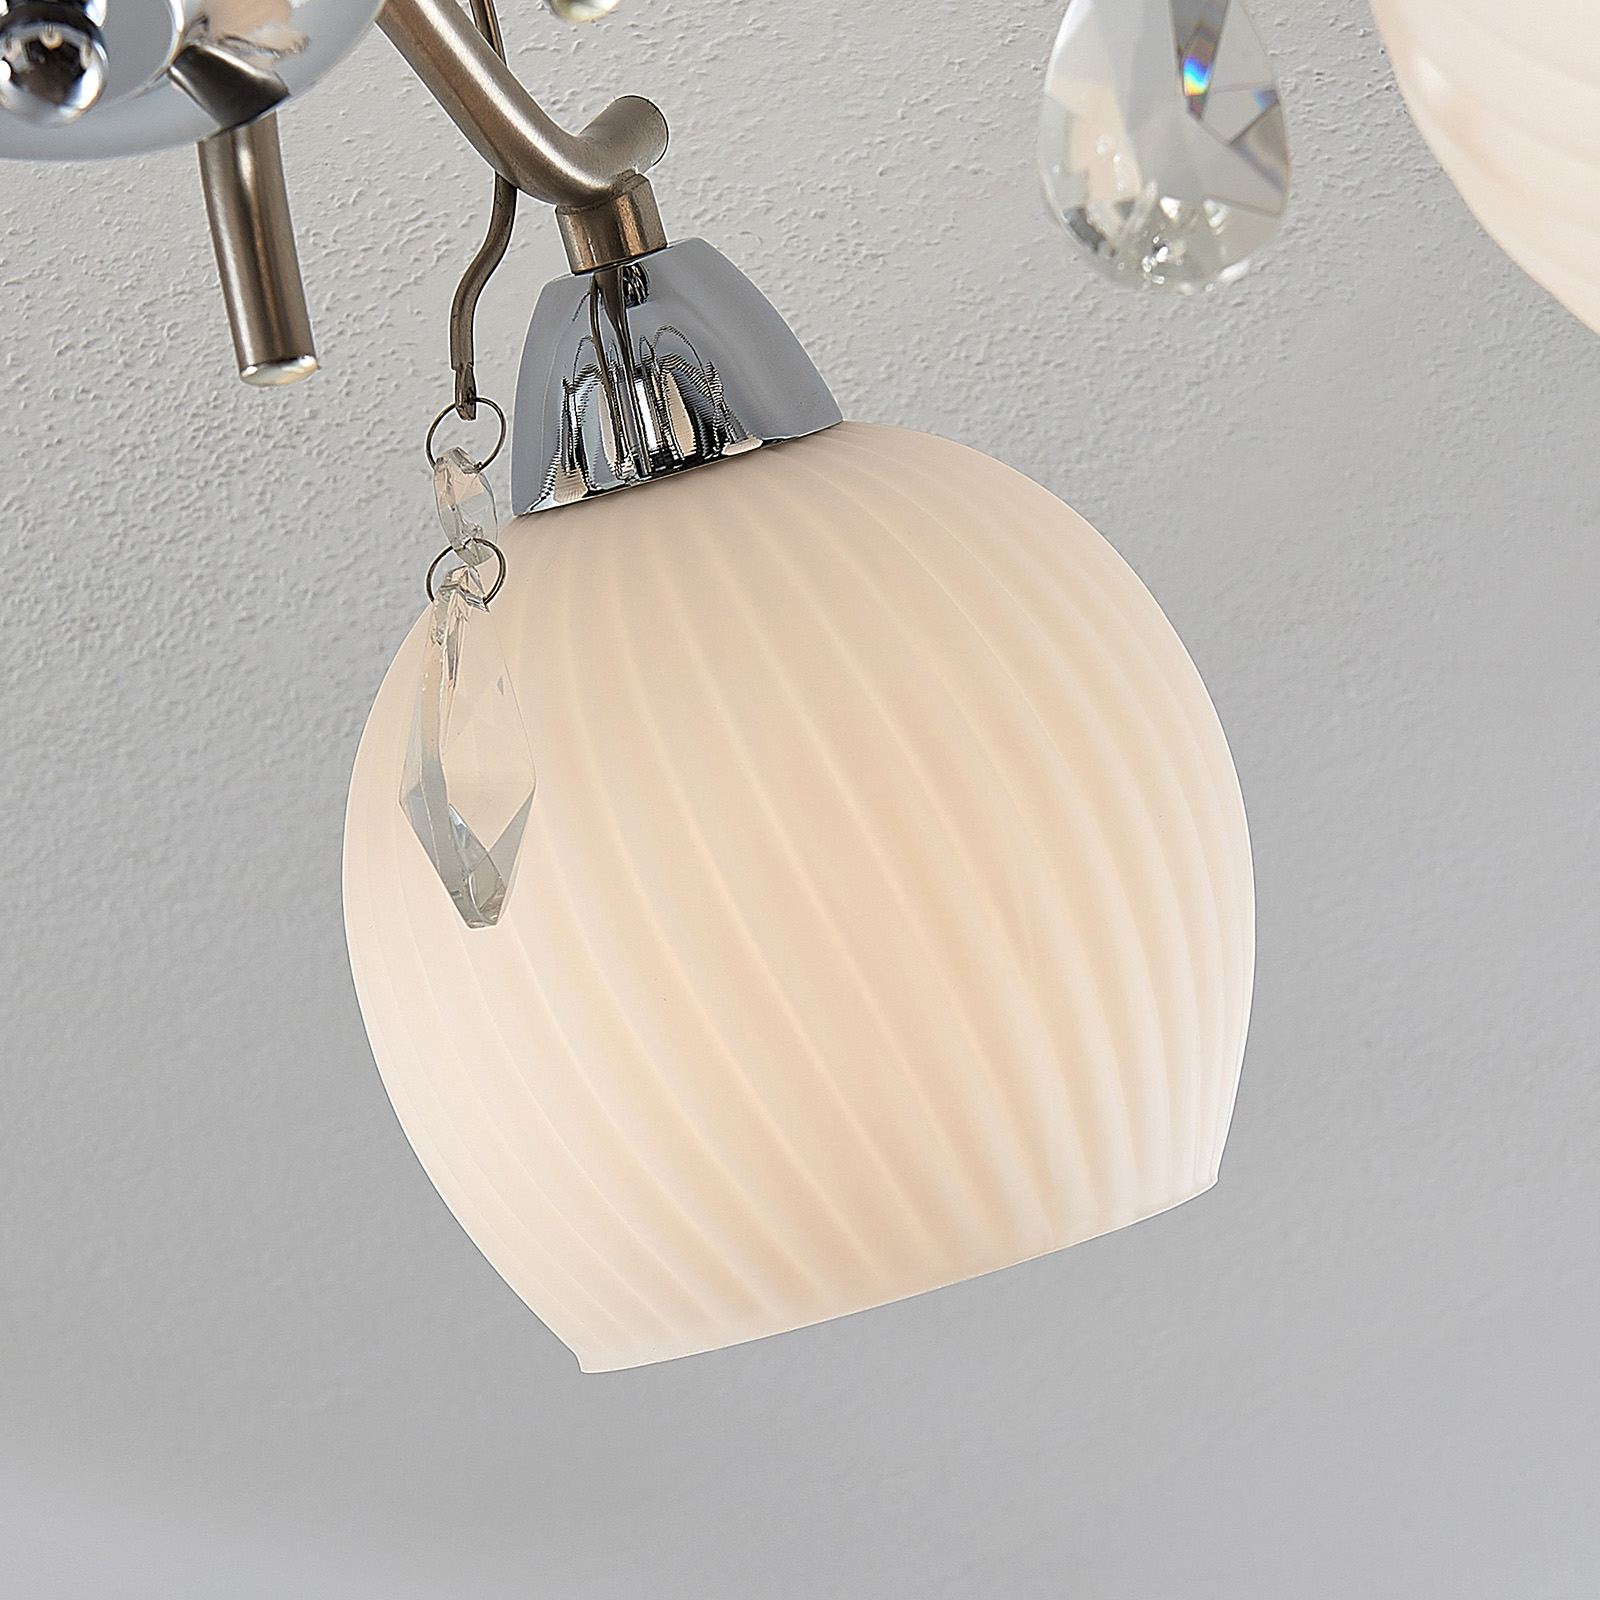 Lindby Feodora plafondlamp met glas, 5-lamps